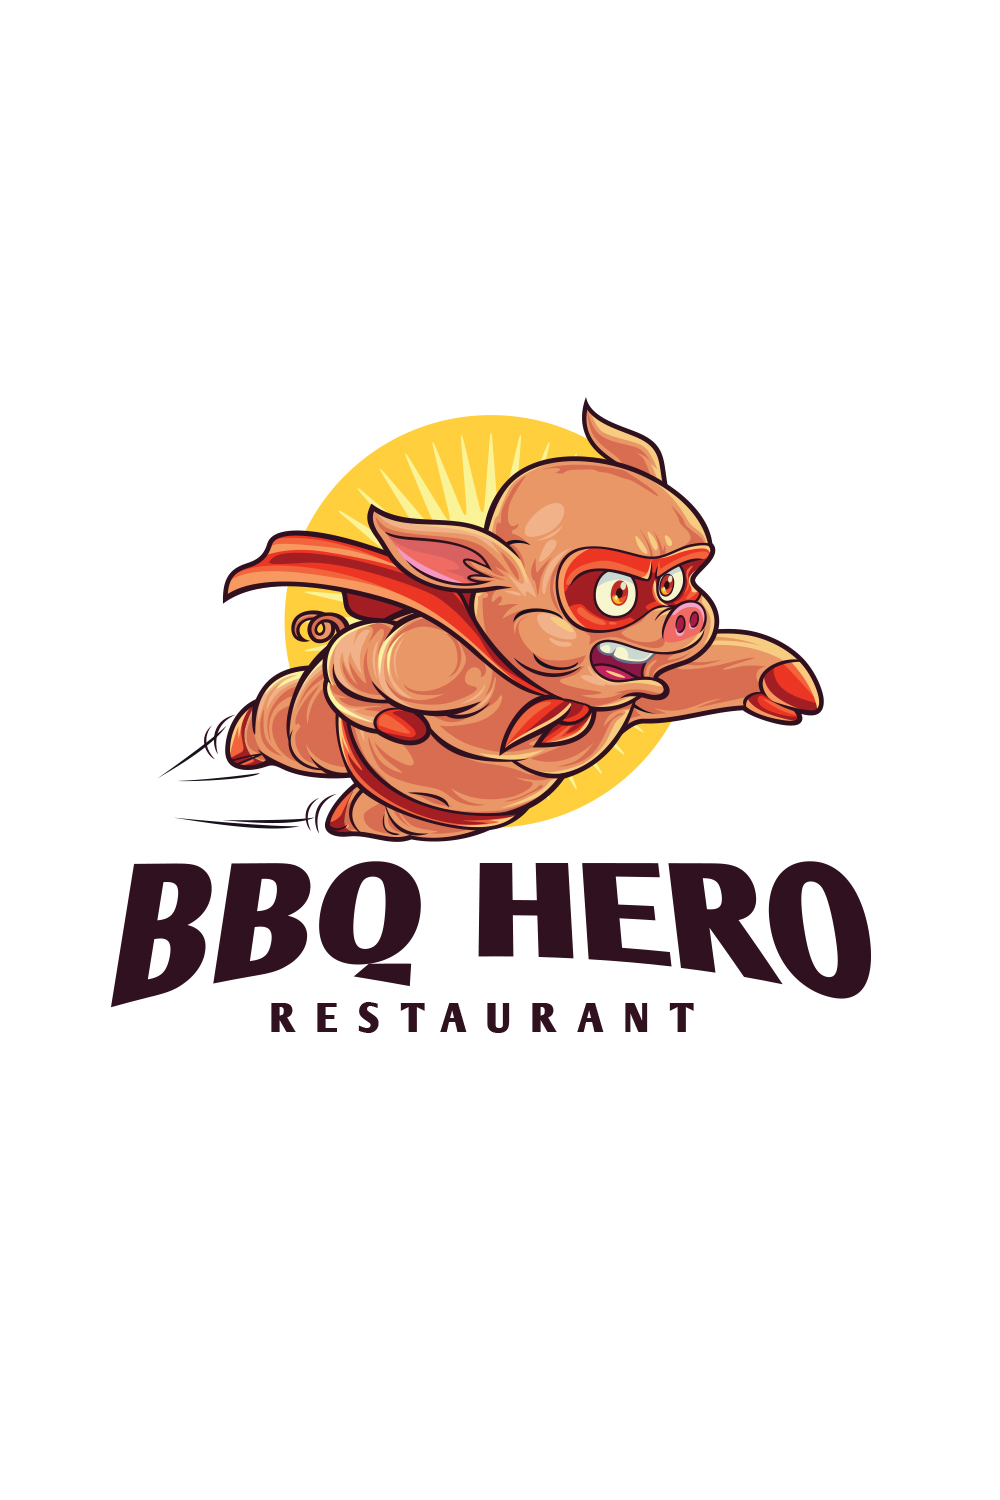 BBQ Hero - Pig Super Hero Mascot Design pinterest preview image.